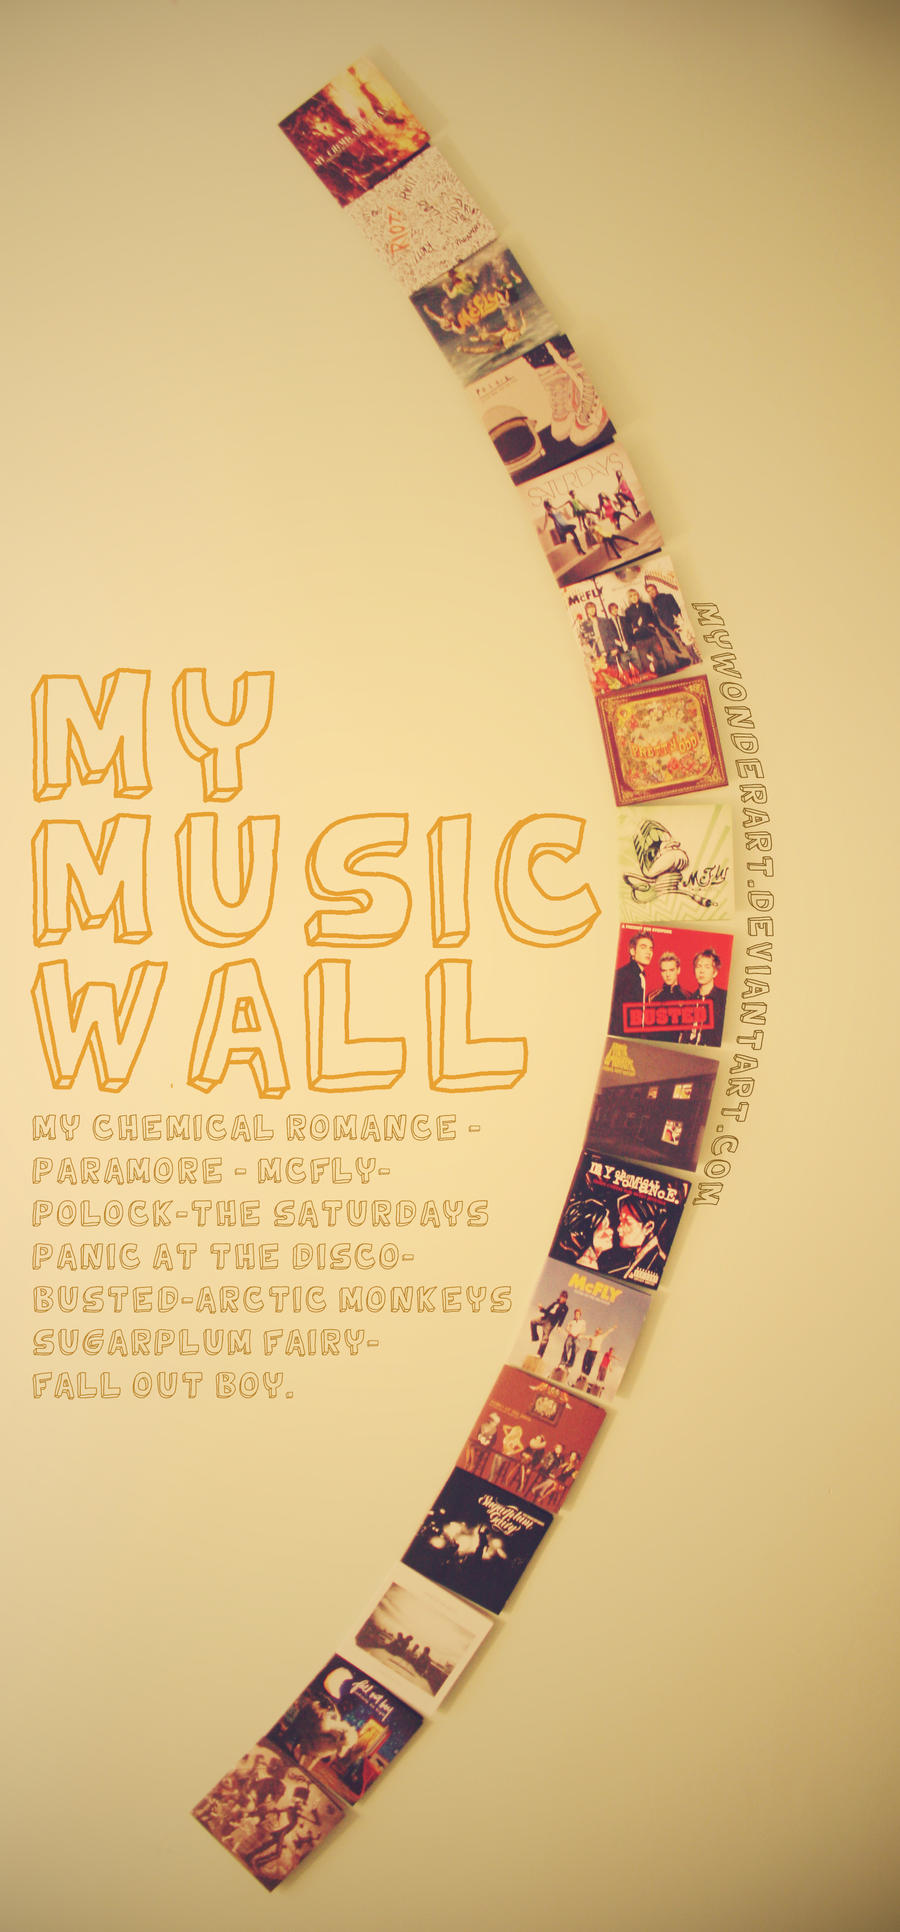 My Music Wall